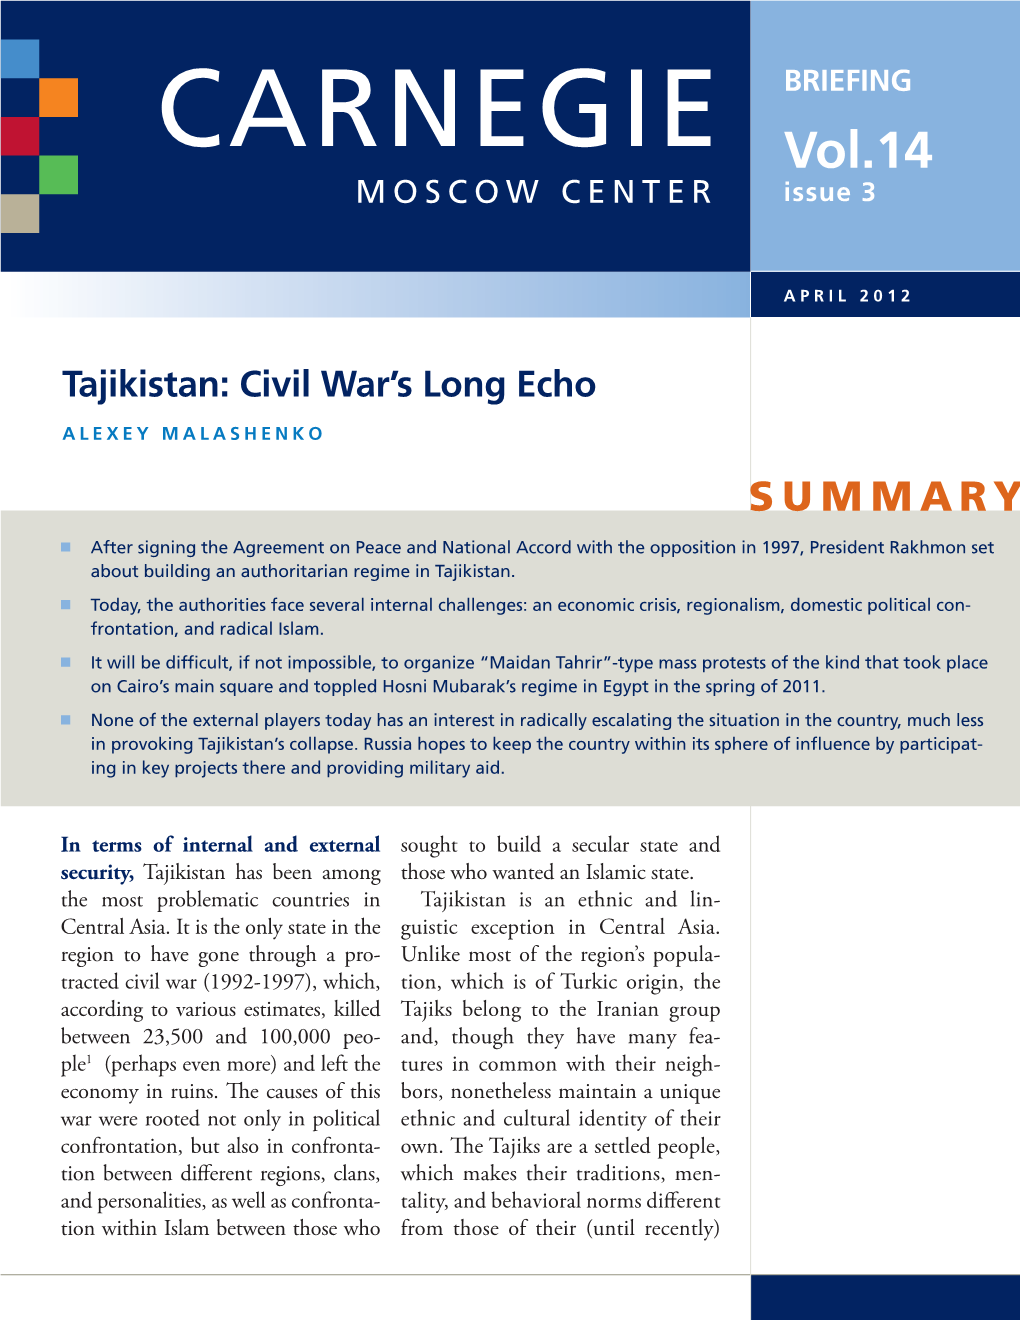 Tajikistan: Civil War's Long Echo